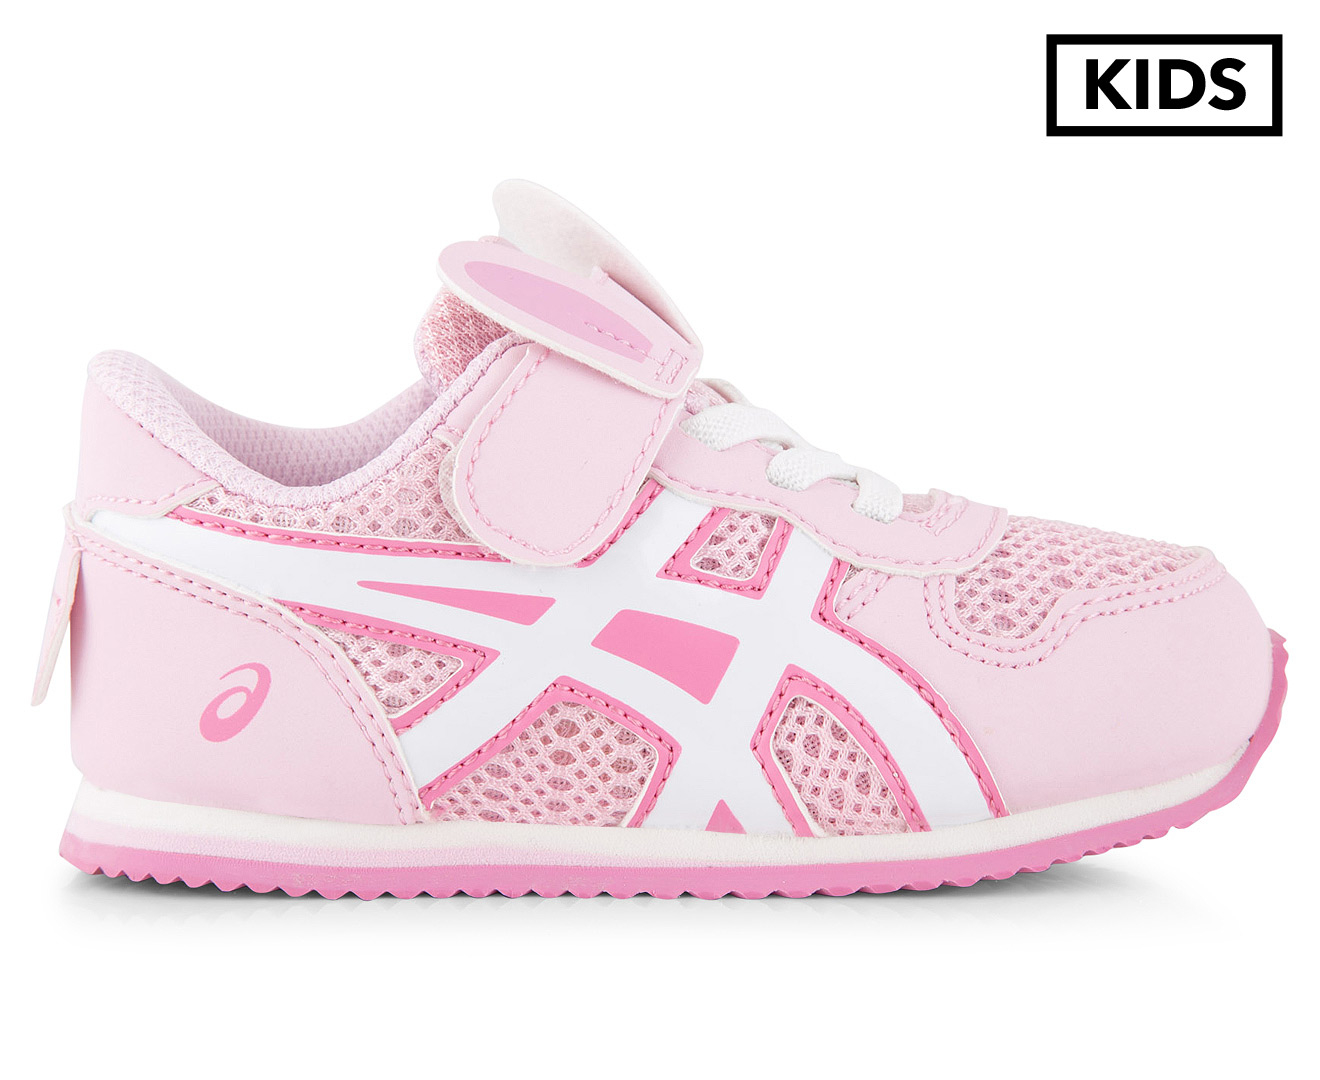 ASICS Kids' Animal Pack Bunny Shoe - Pink/White